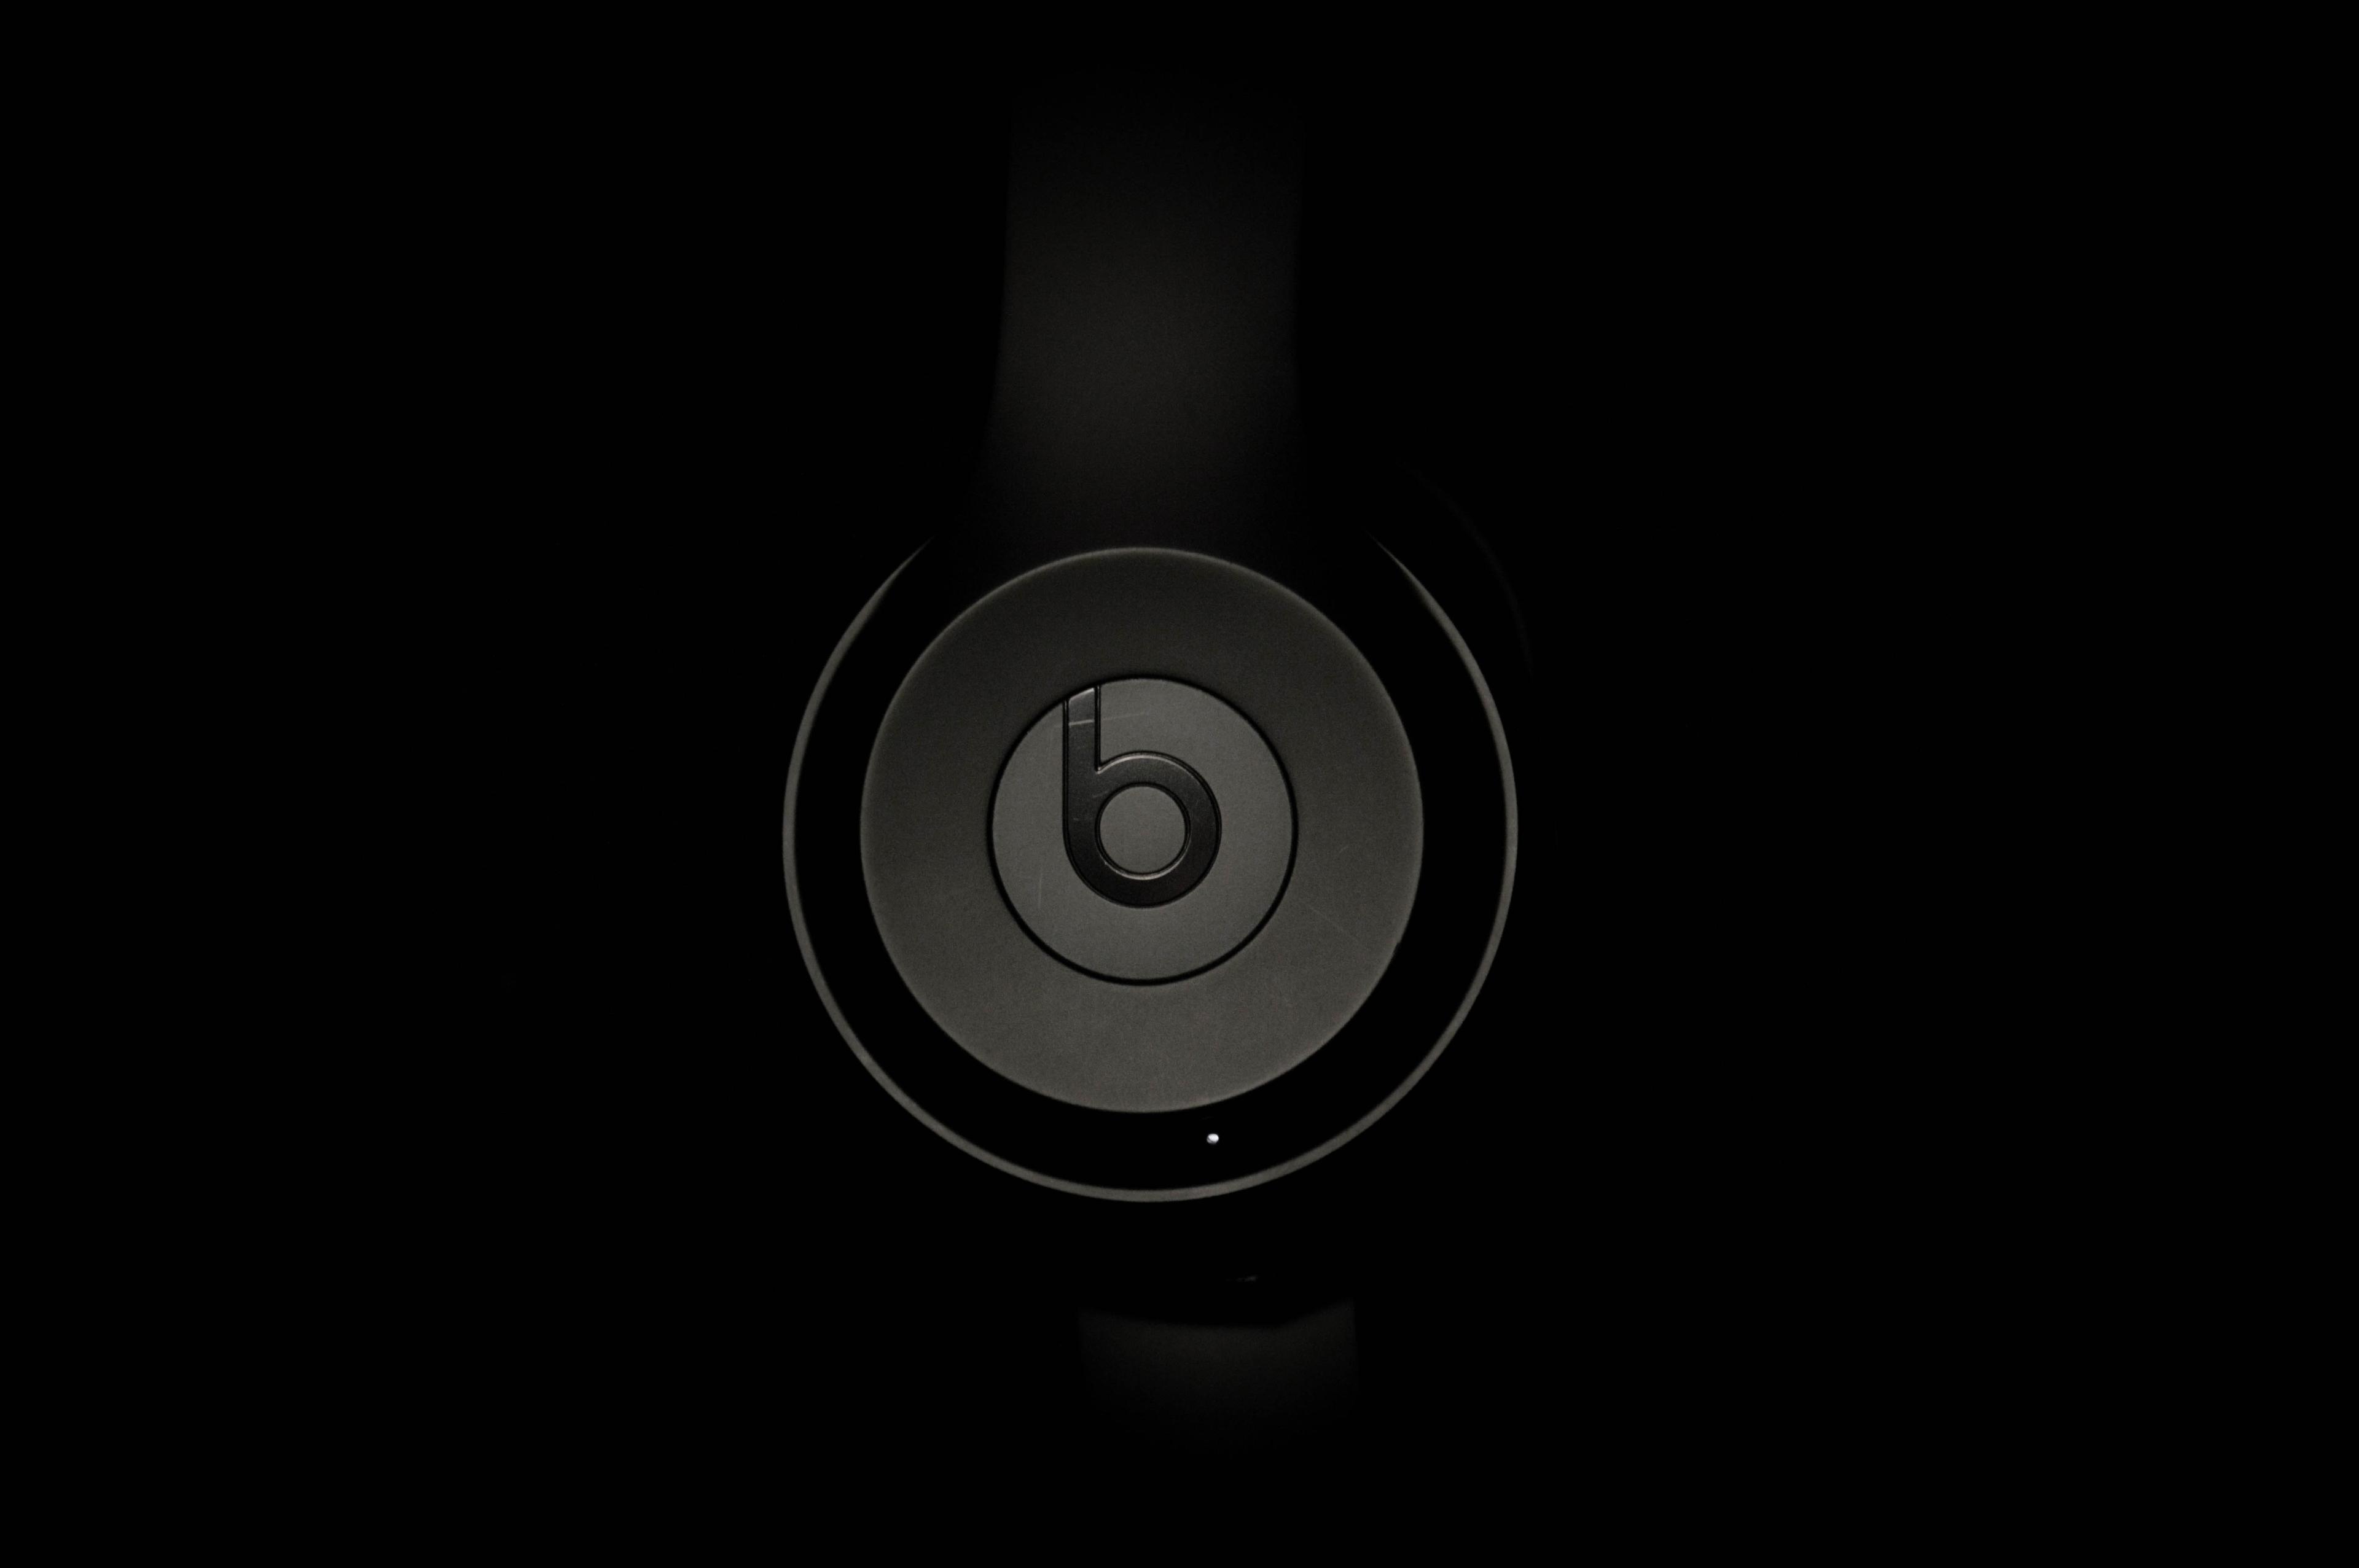 Dr. Beat headphones with dark background.